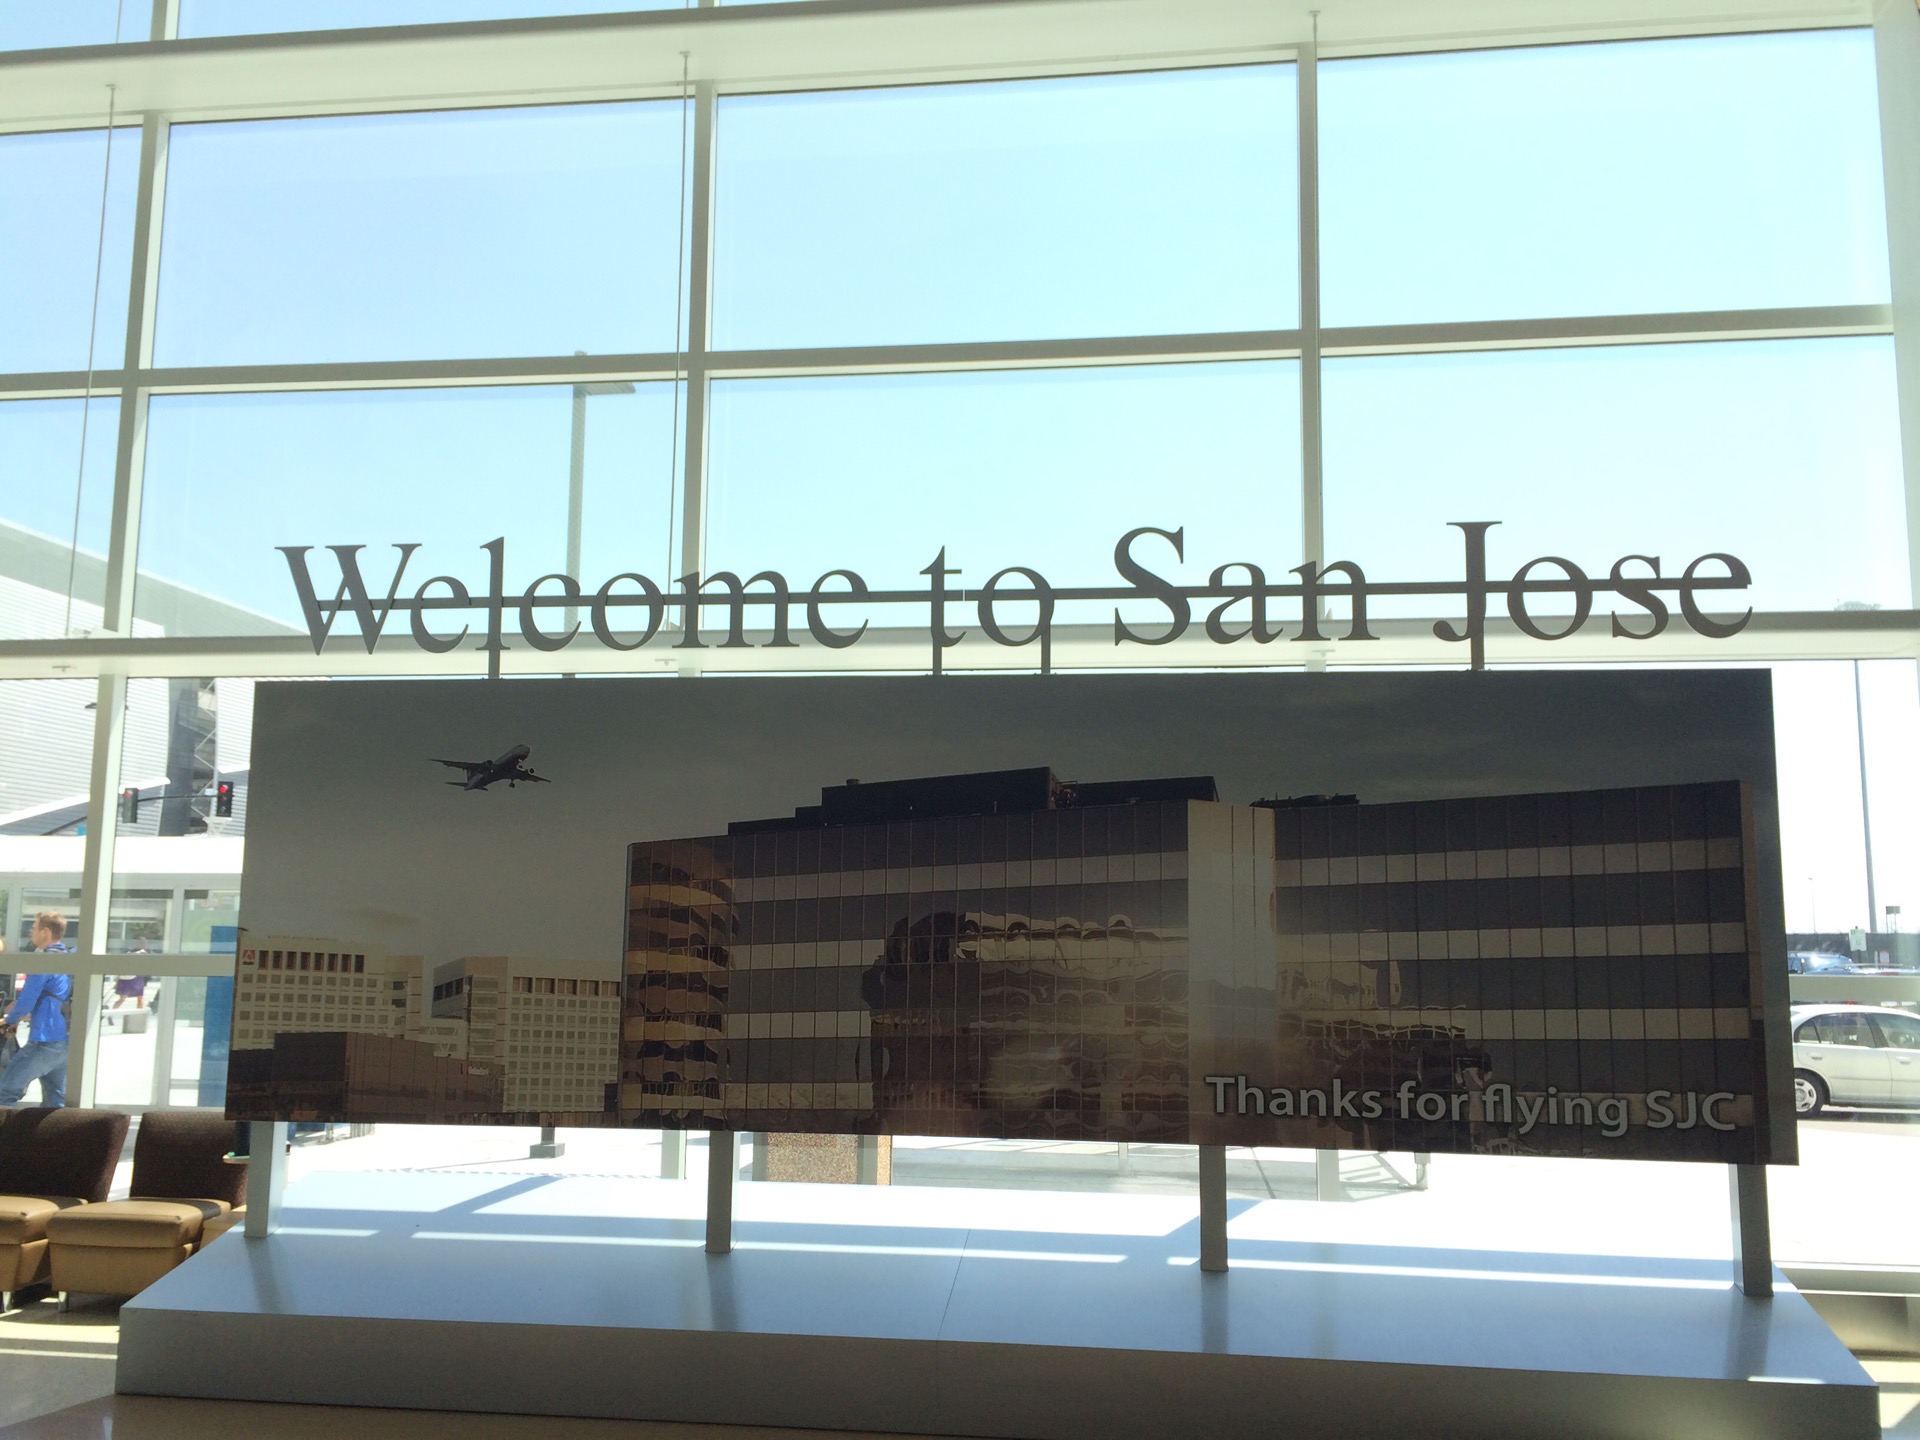 Welcome to San Jose